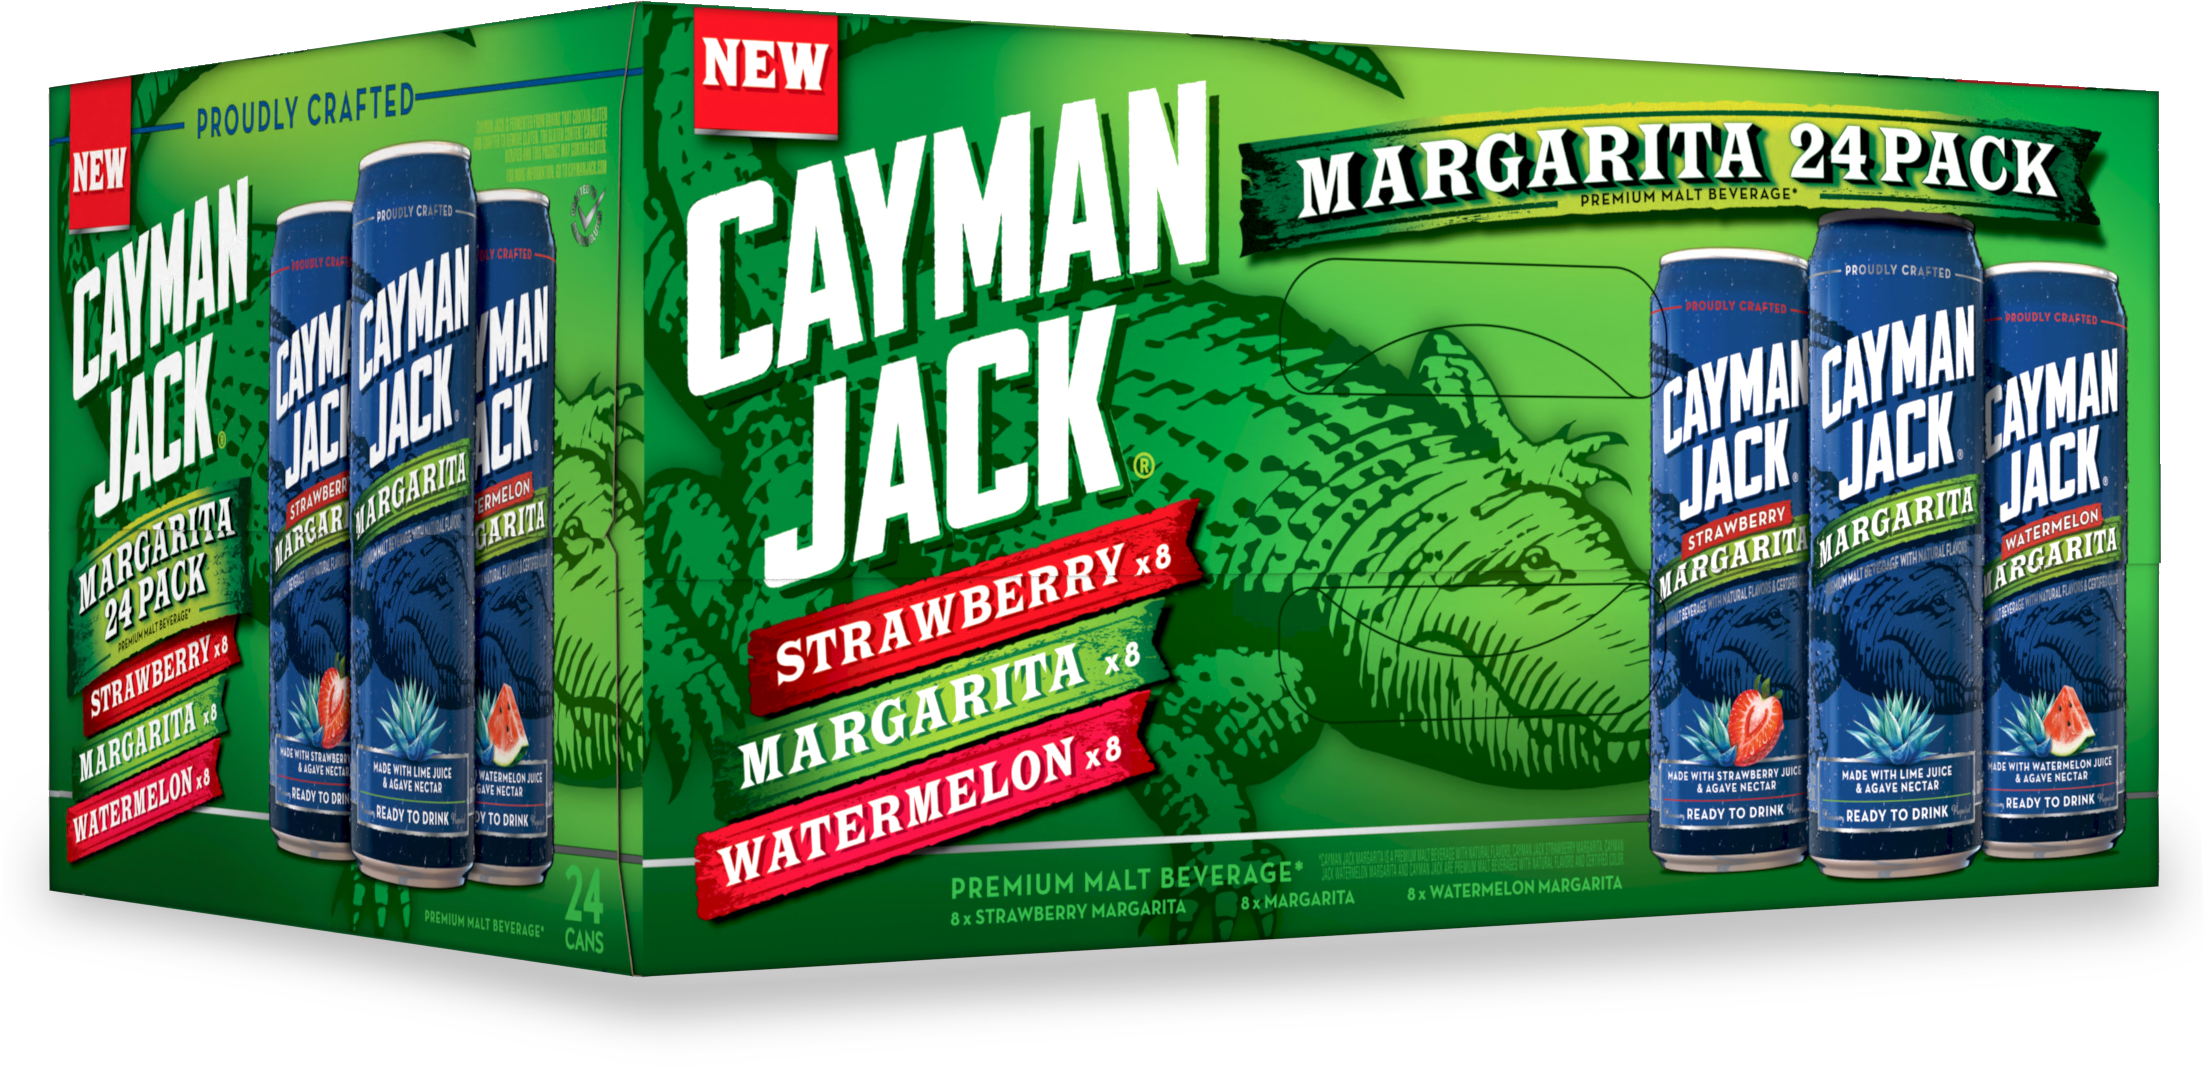 Margarita Variety Pack 24-Pack